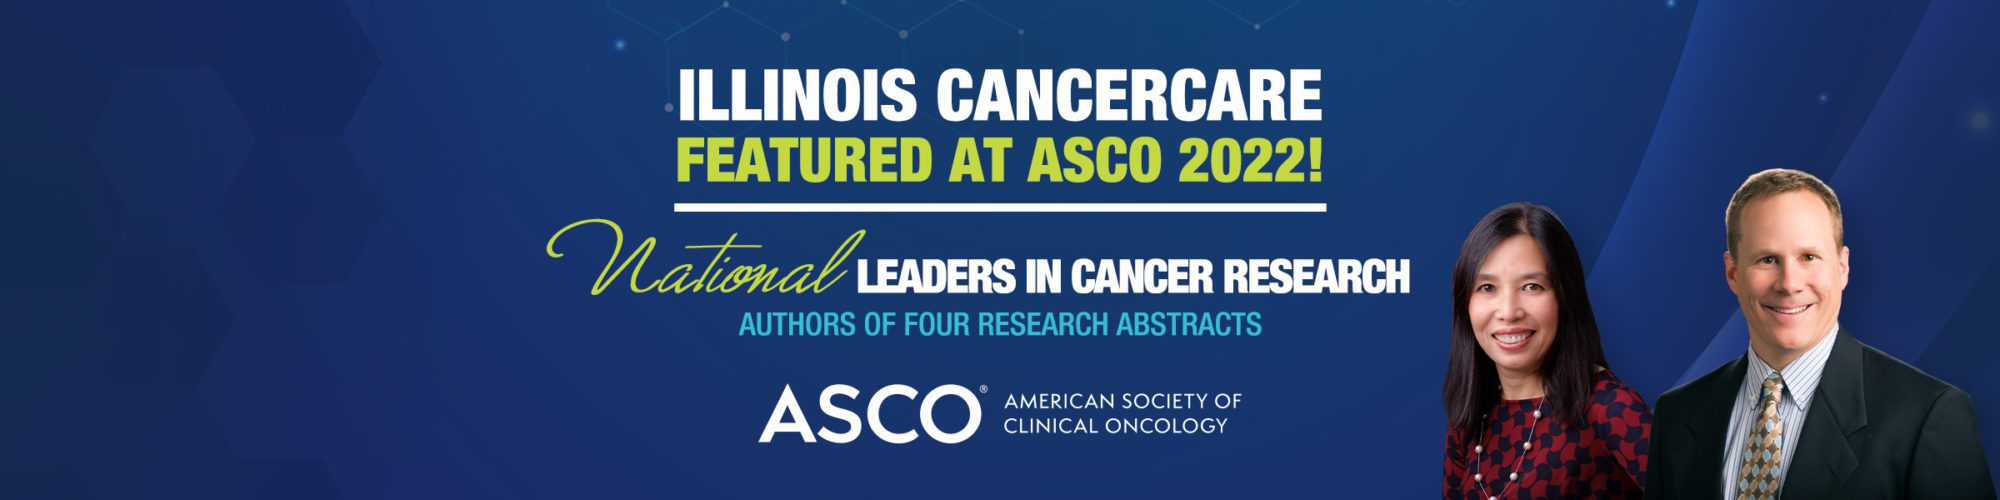 Illinois CancerCare featured at ASCO 2022